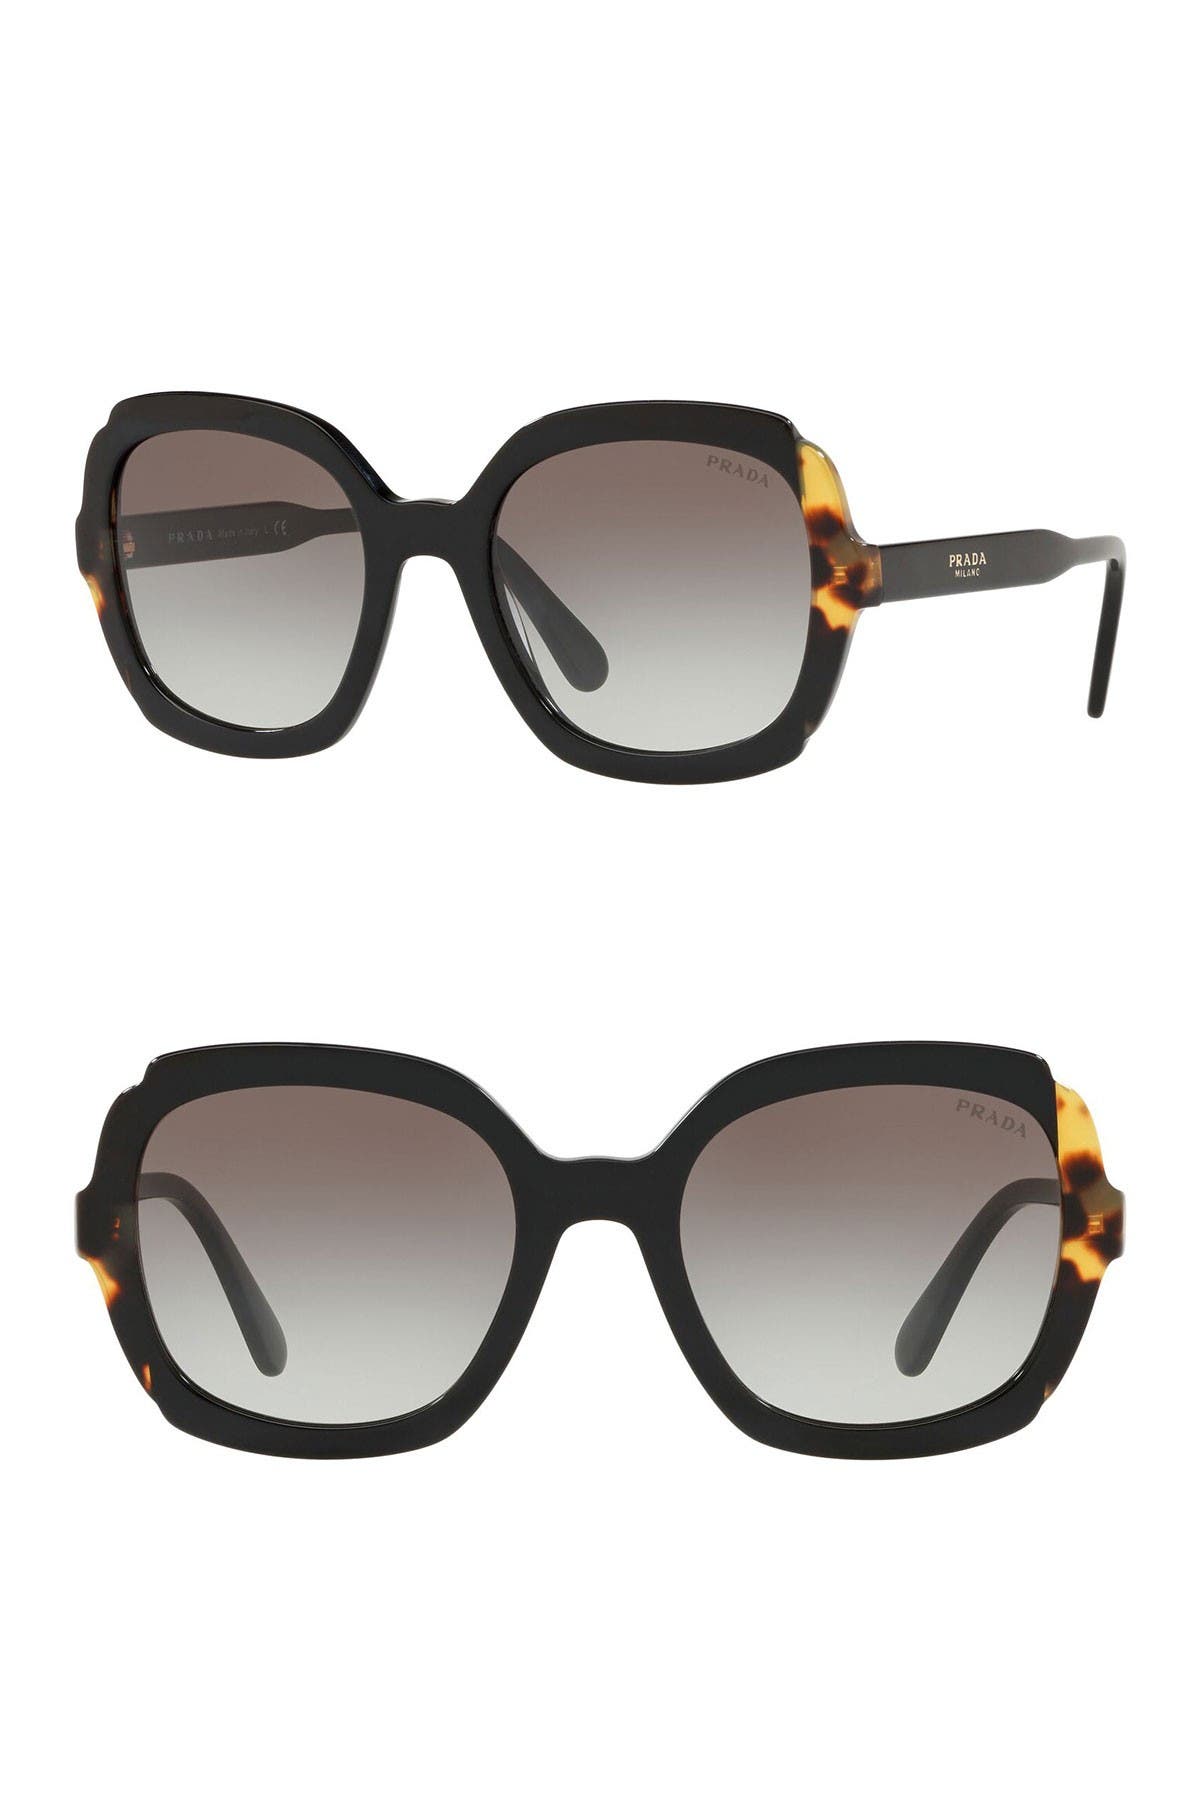 prada butterfly sunglasses